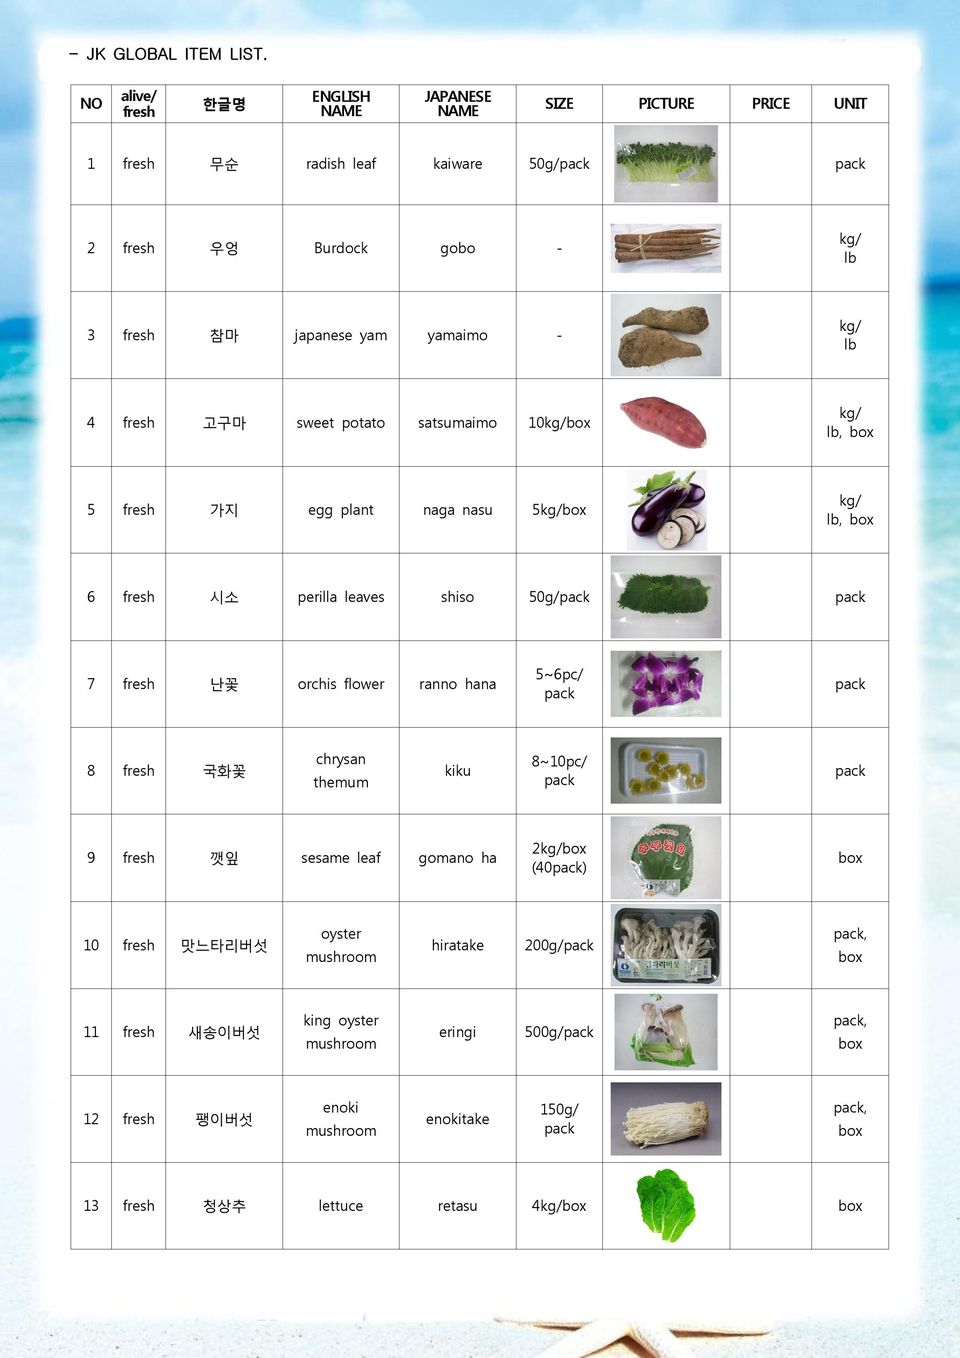 hana 5~6/ 8 국화꽃 chrysan themum kiku 8~10/ 9 깻잎 sesame leaf gomano ha 2 (40) 10 맛느타리버섯 oyster